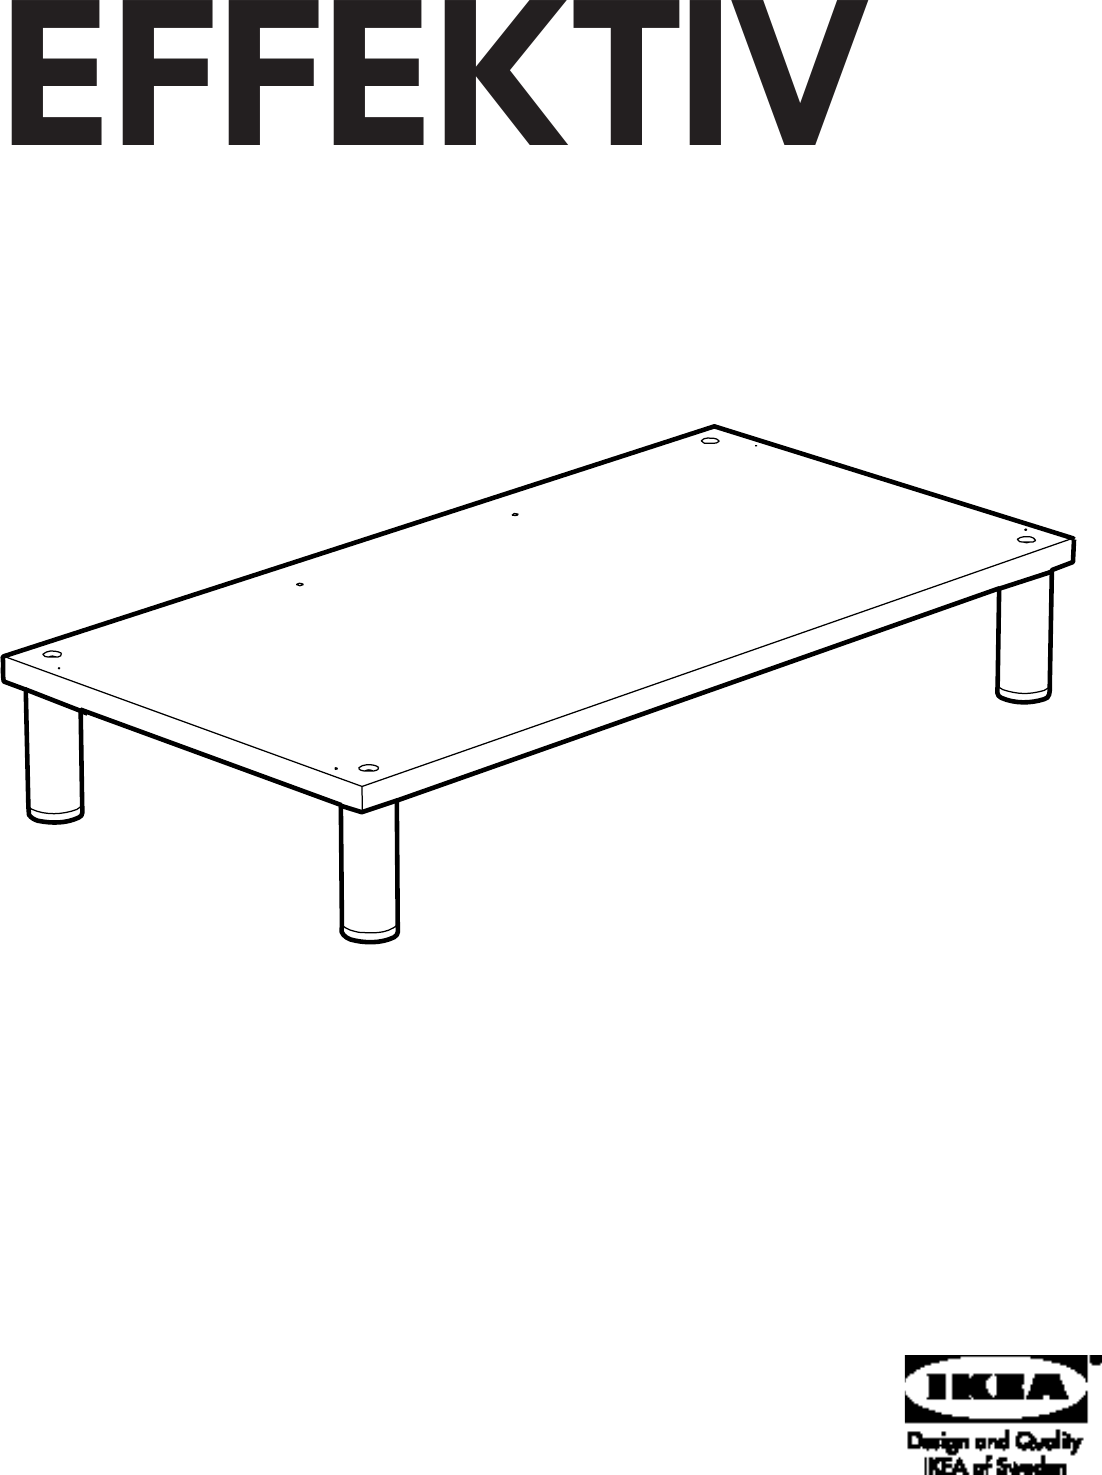 Page 1 of 4 - Ikea Ikea-Effektiv-Base-Legs-33-1-2-Assembly-Instruction